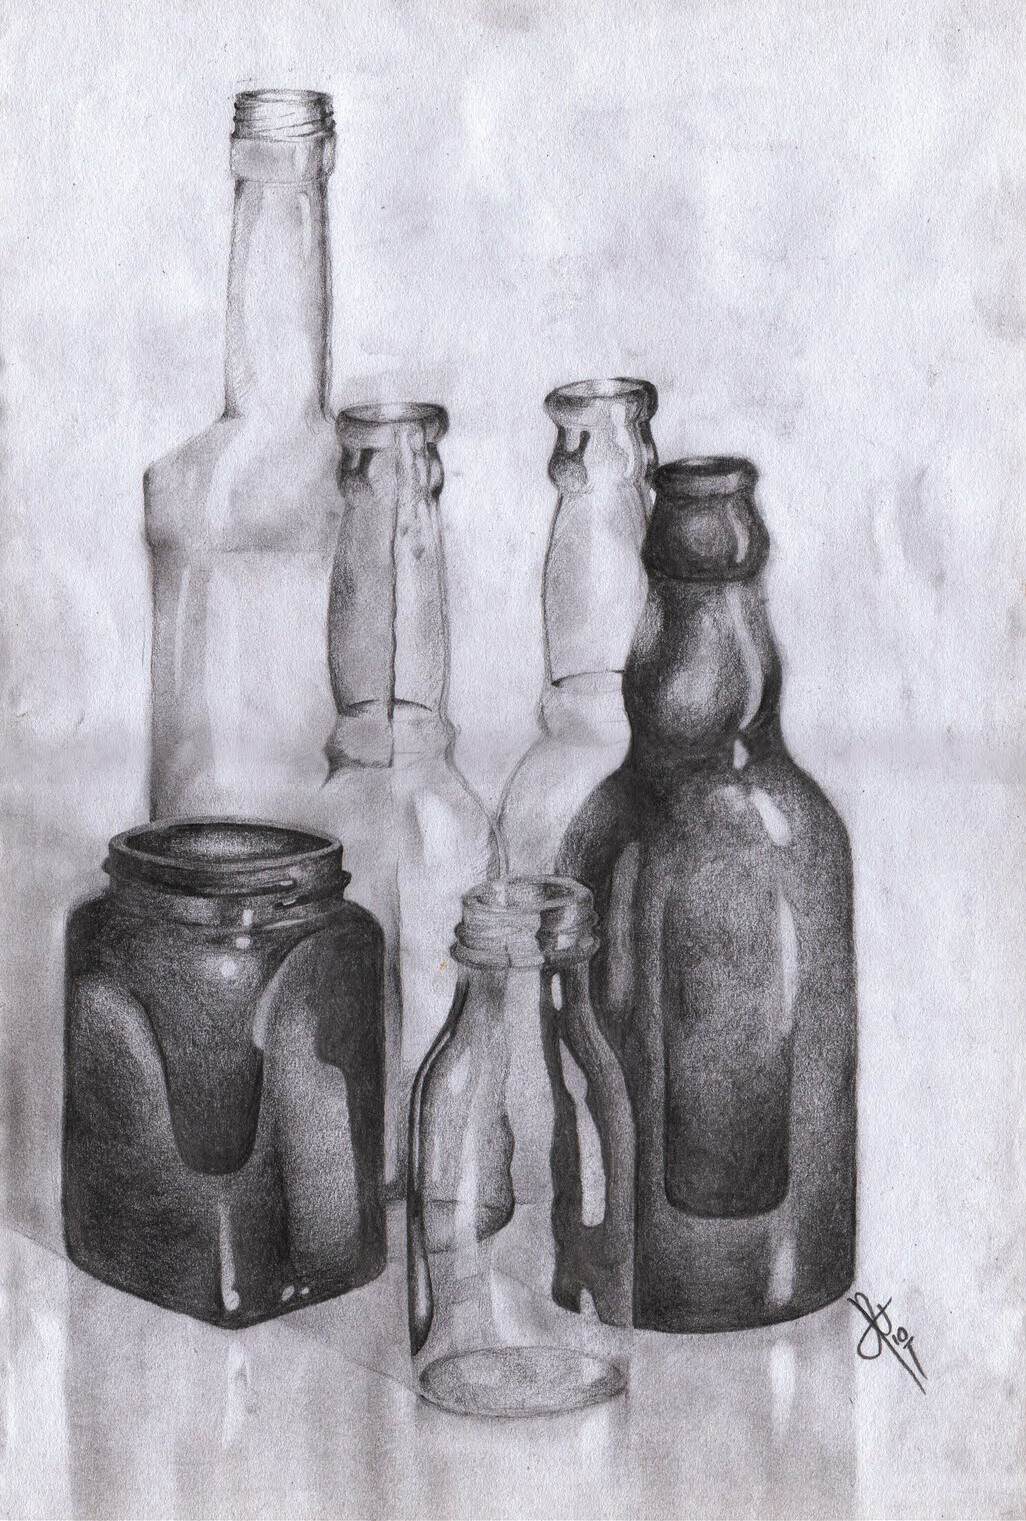 Pencil Illustration of bottles